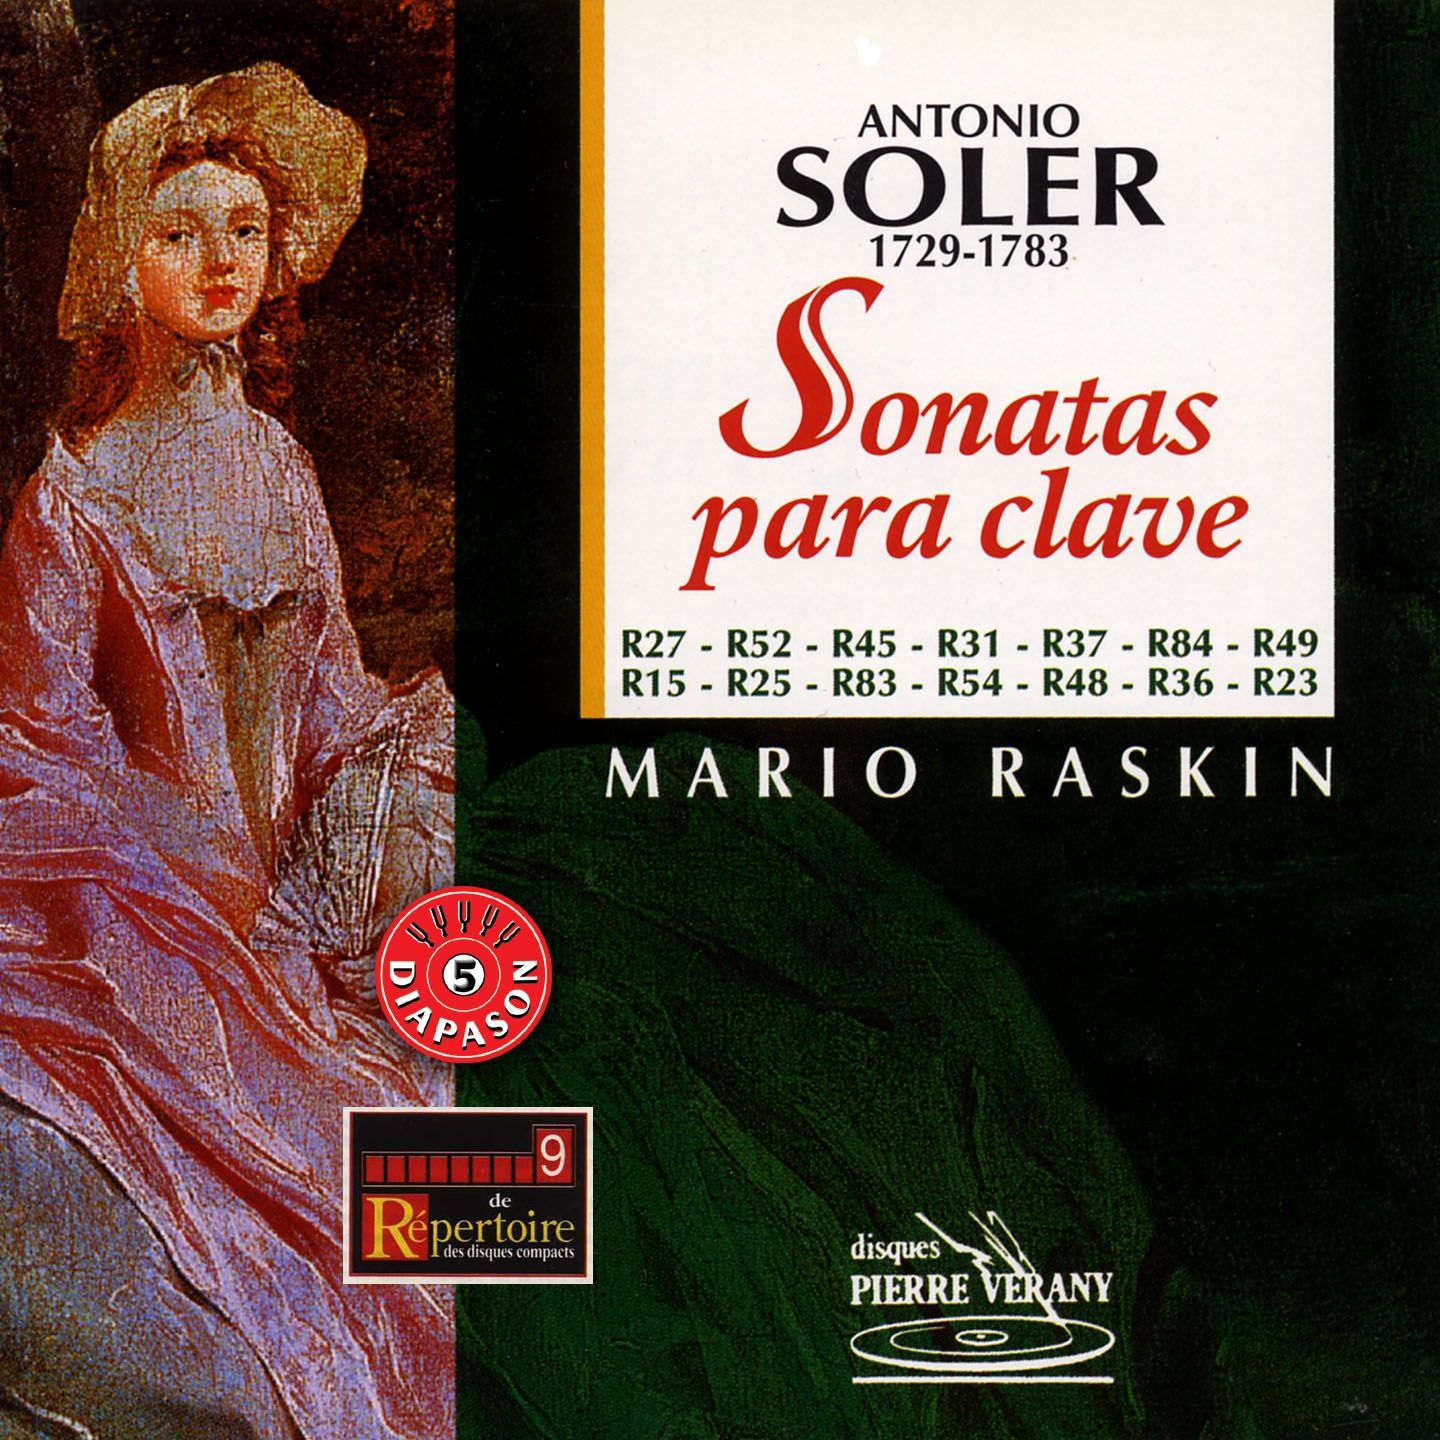 Soler - Sonatas para clave - Mario Raskin, harpsichordi